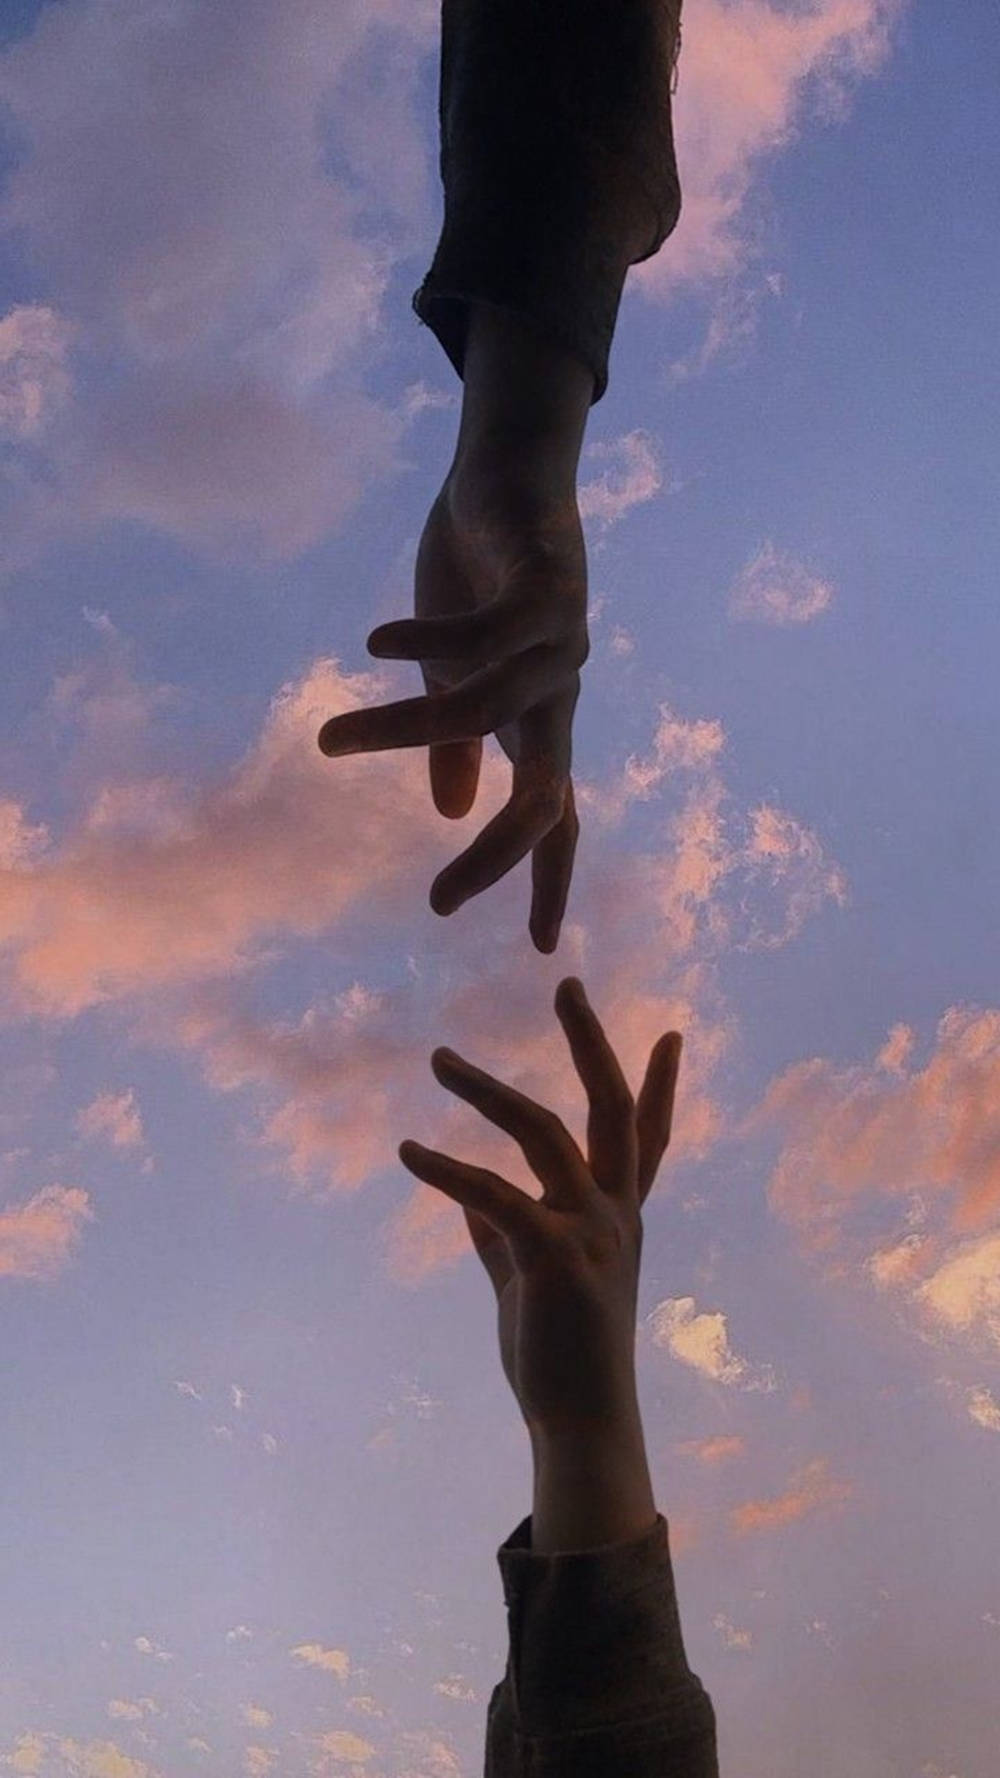 Aesthetic Couple's Hand